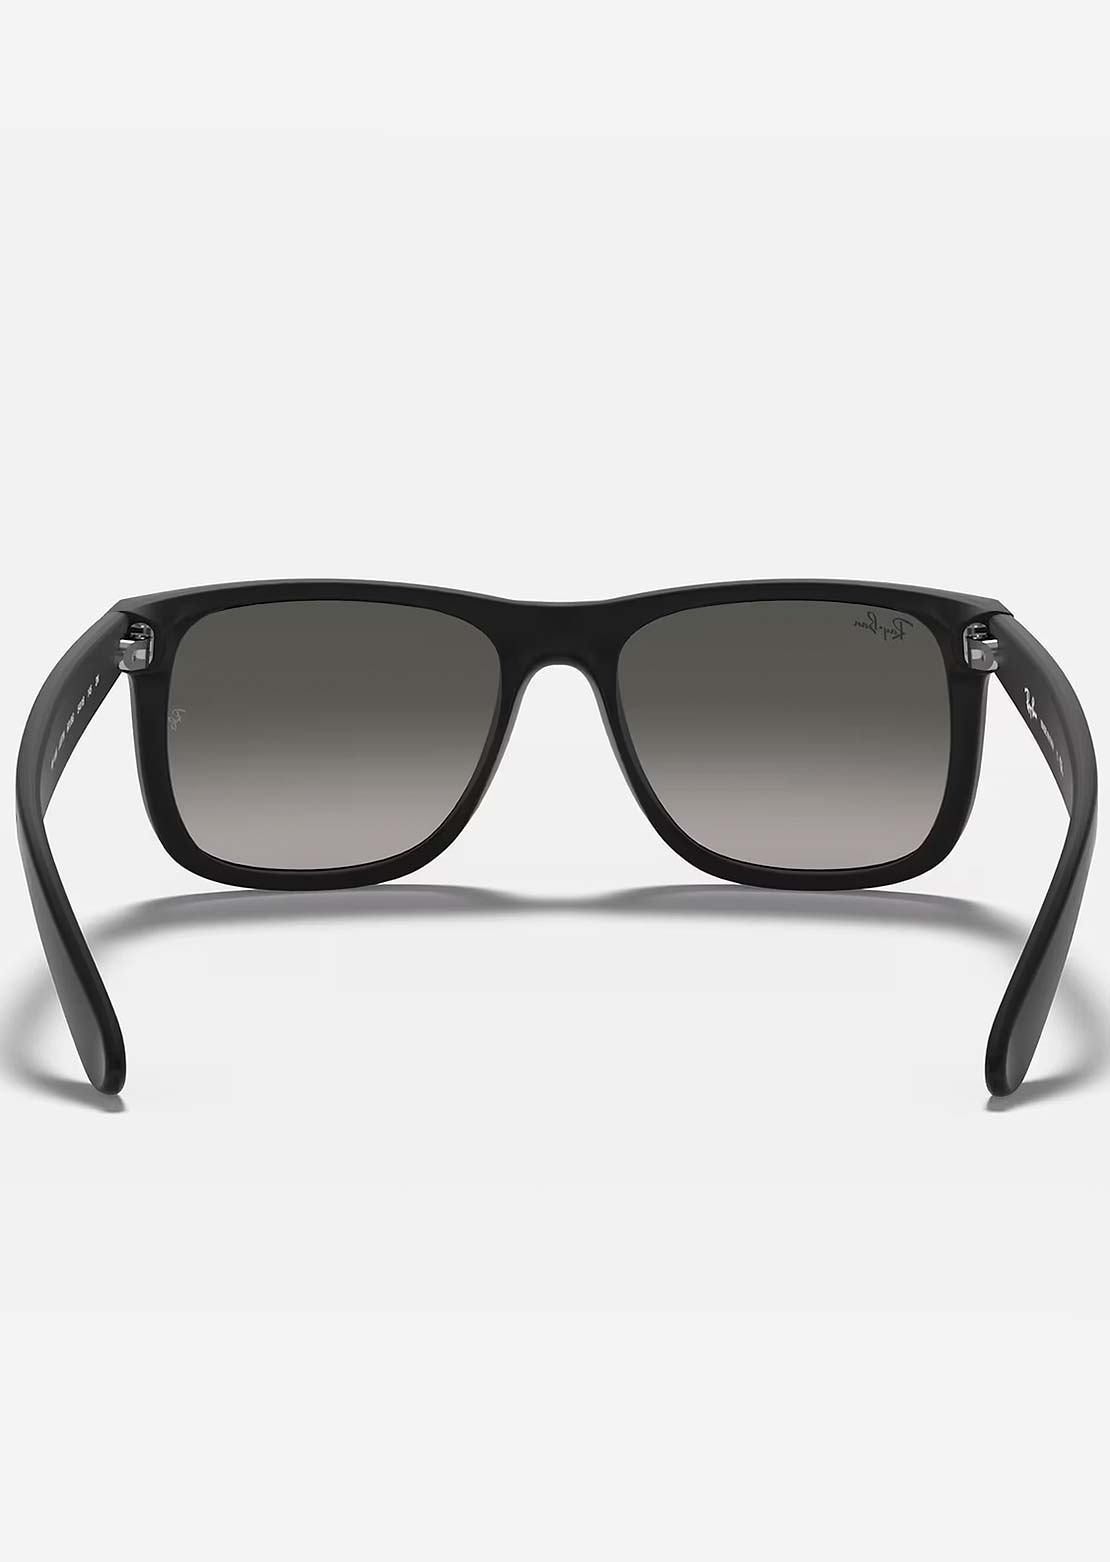 Ray-Ban Justin Classic RB4165 Polarized Sunglasses Black